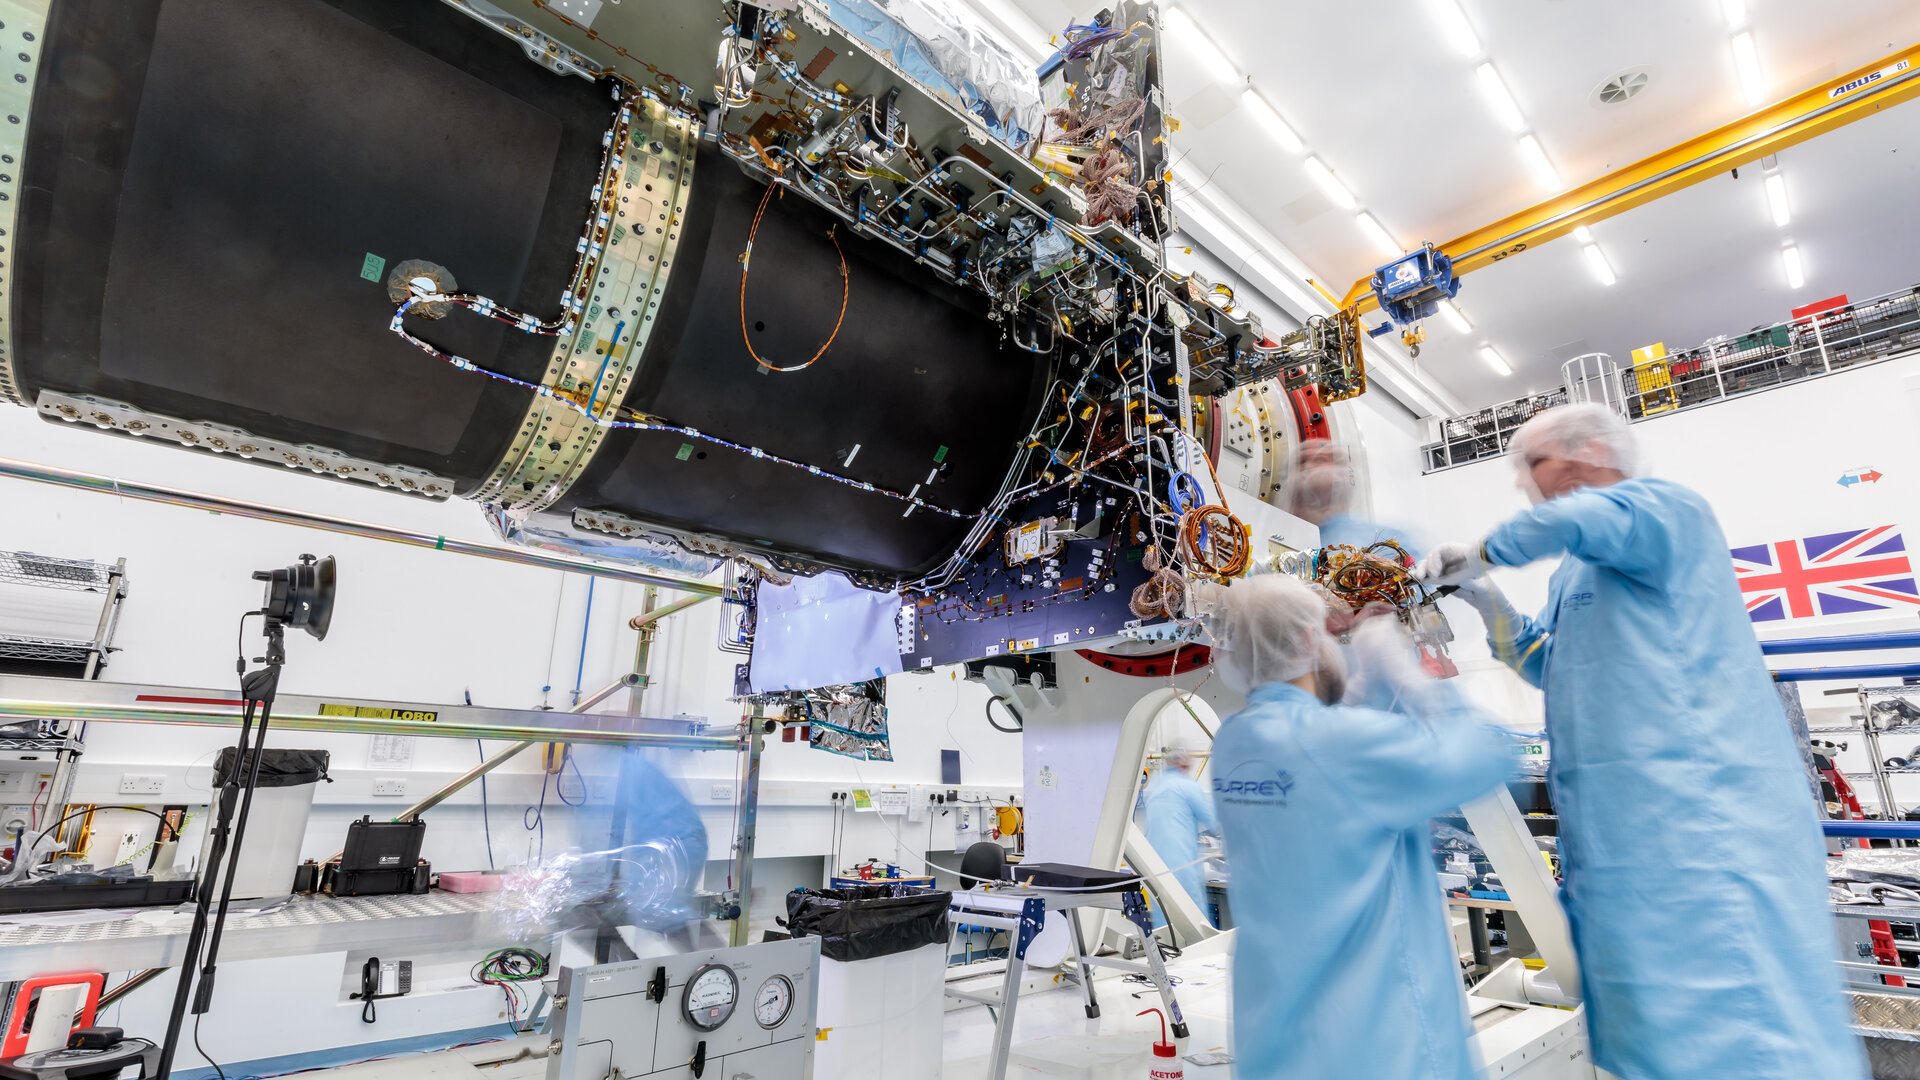 The Eutelsat Quantum satellite was built by Surrey Satellite Technology Ltd in Guildford